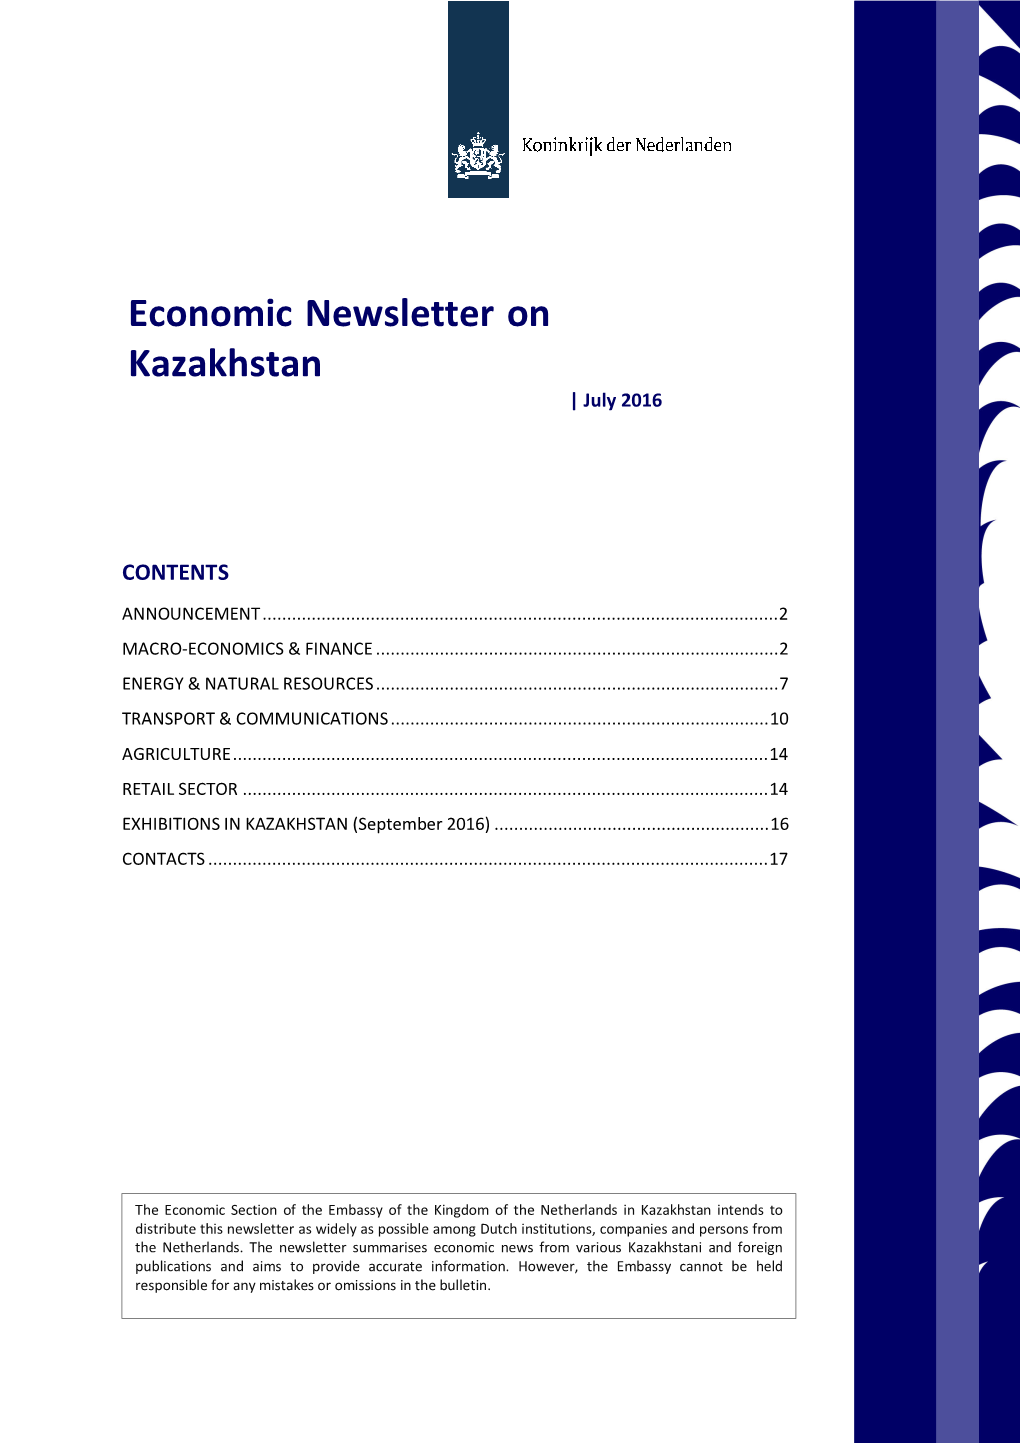 Economic Newsletter on Kazakhstan | July 2016